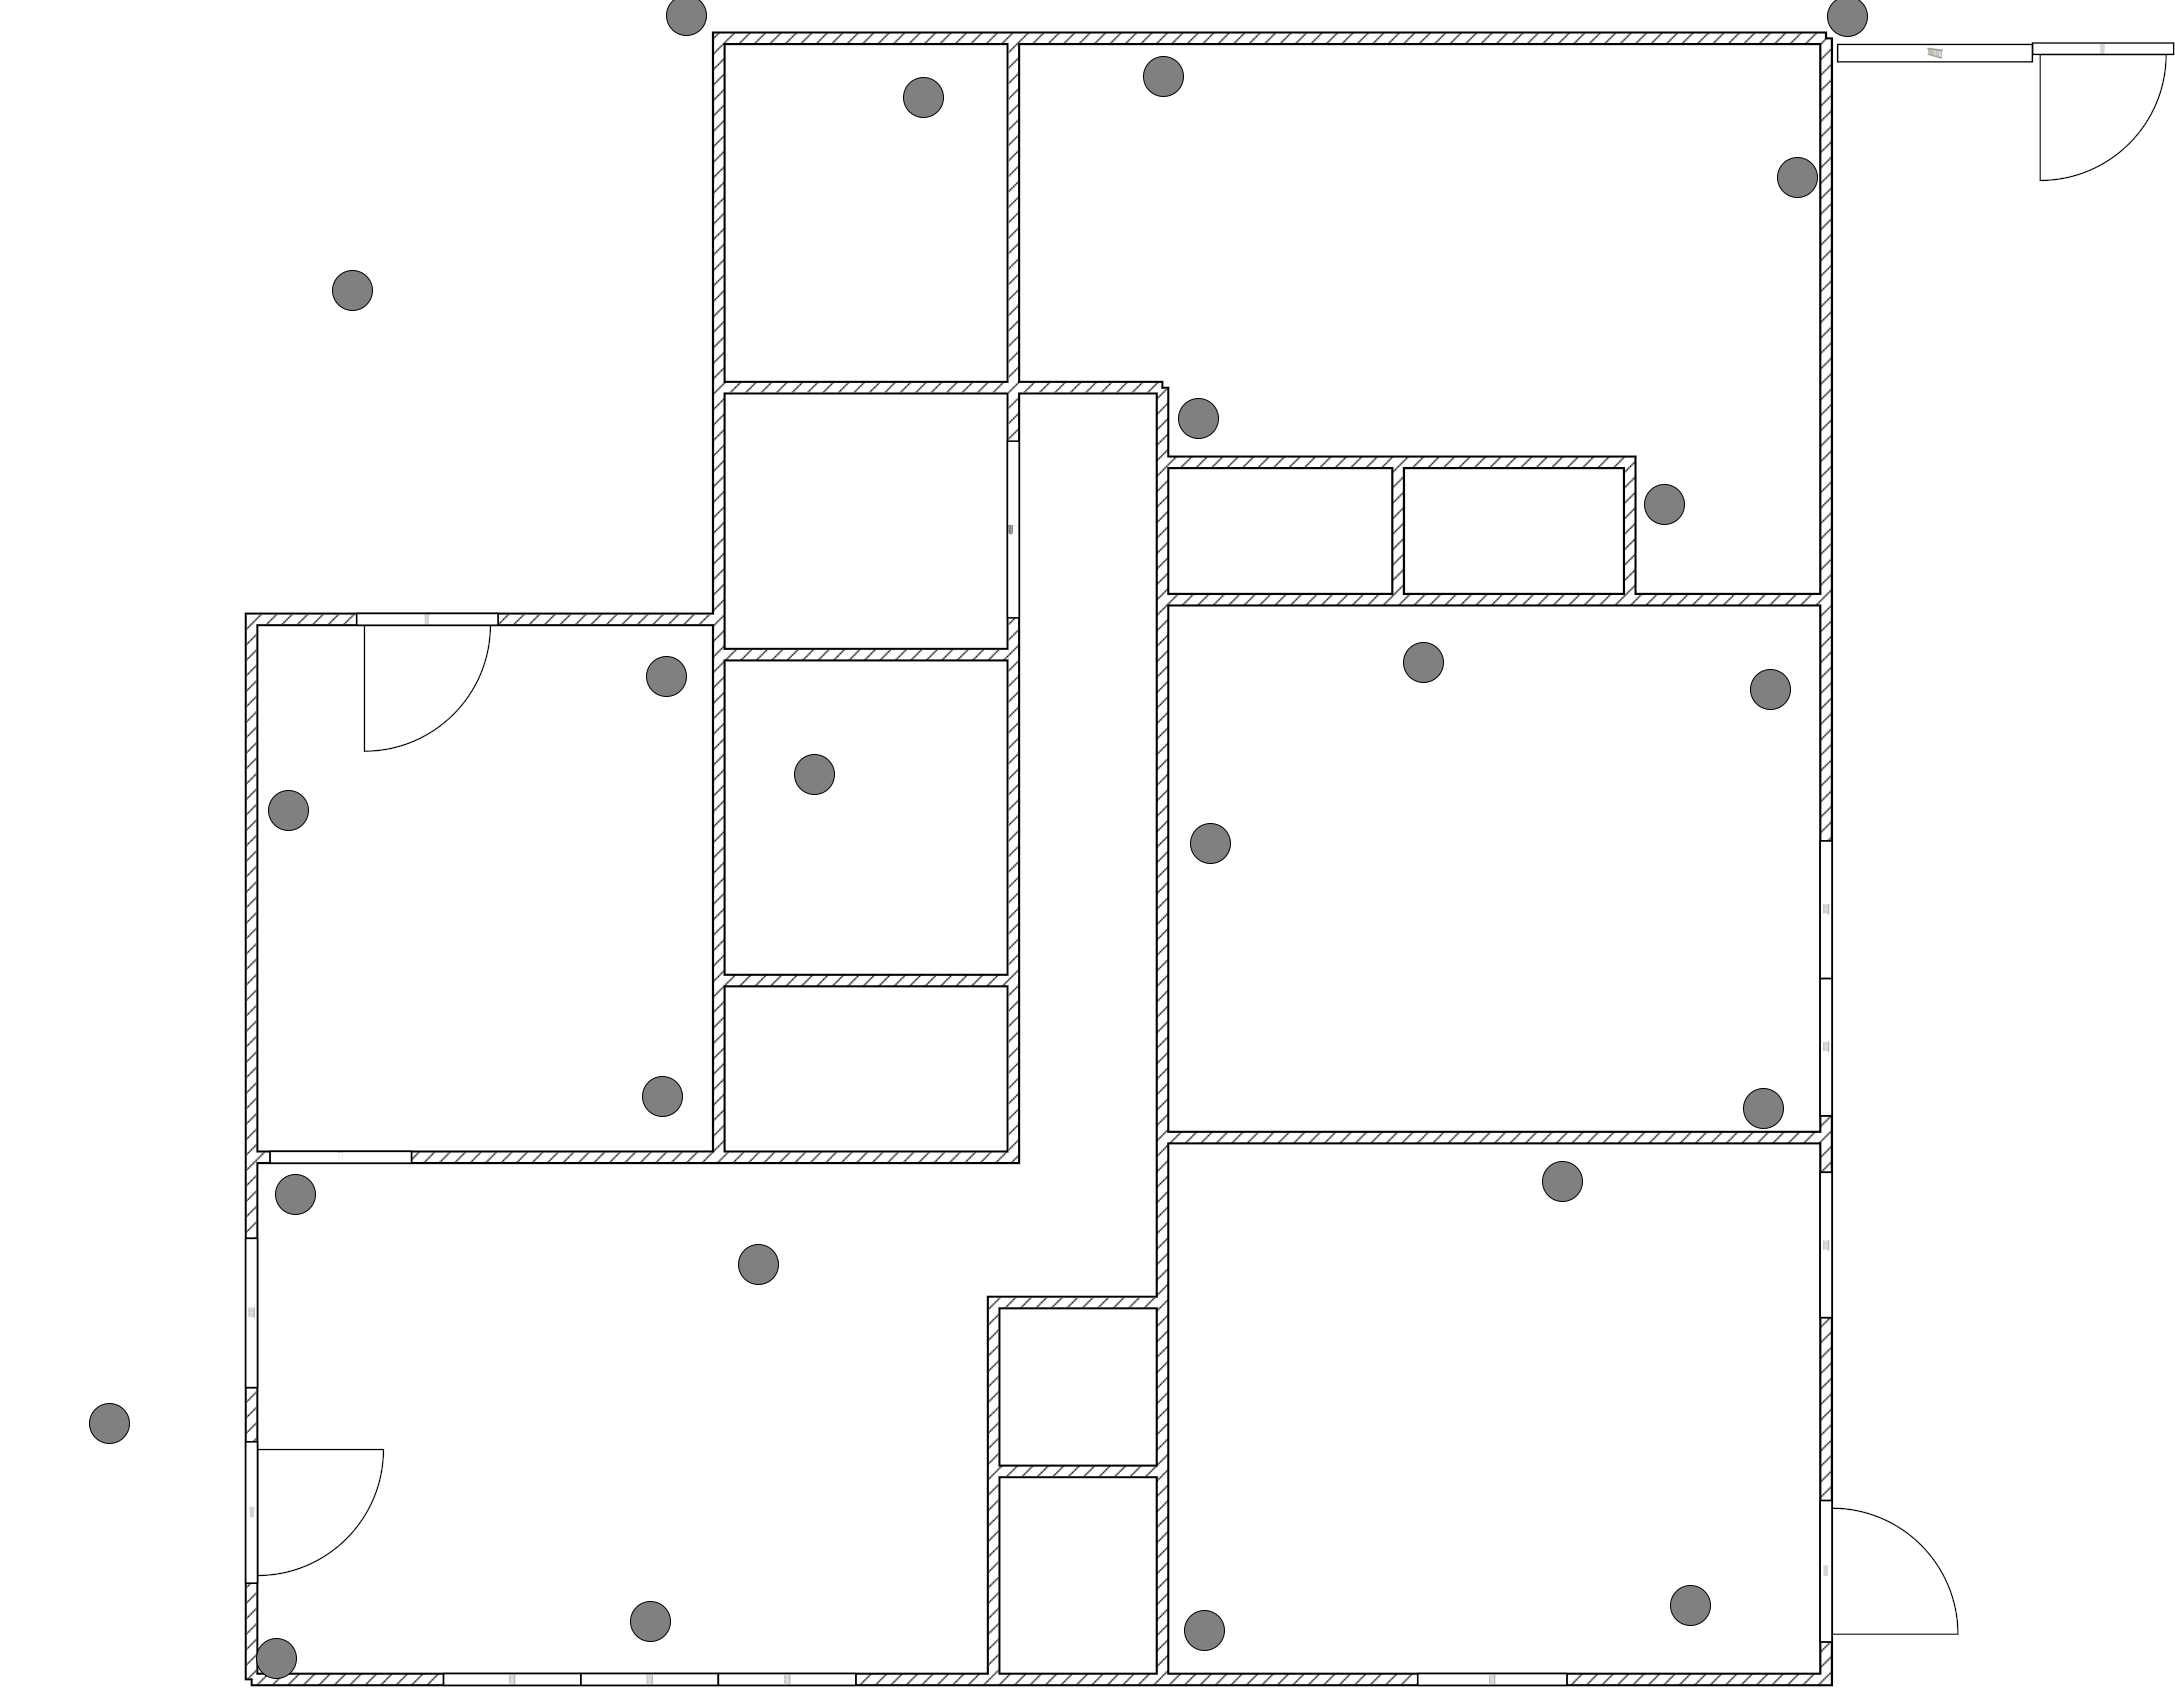 example floorplan image with measurement marks